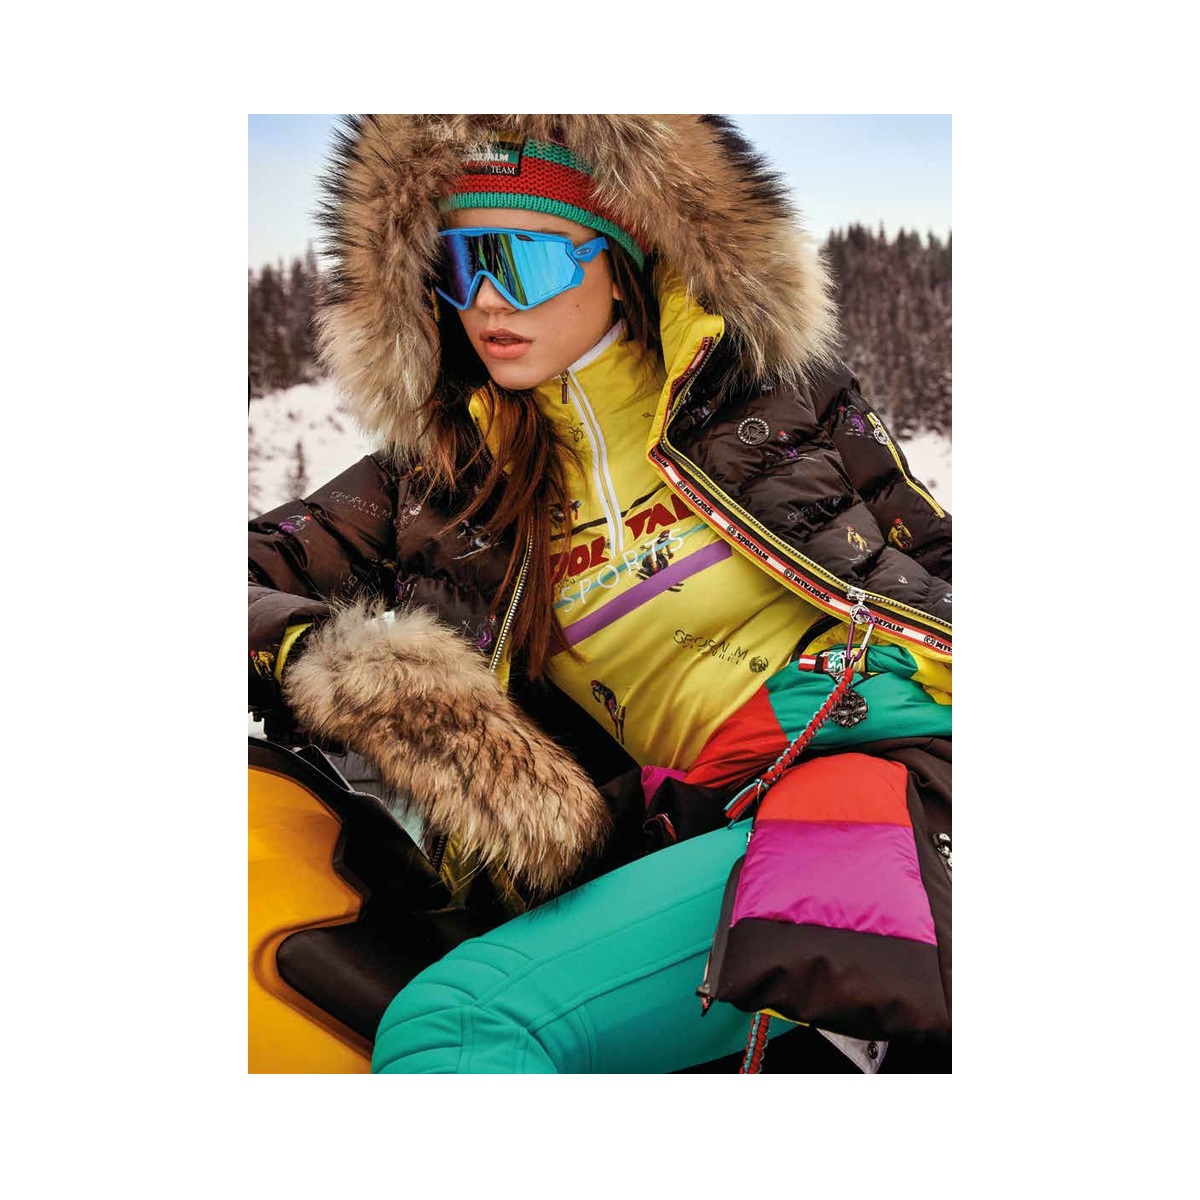 Geci Ski & Snow -  sportalm Kyla Druck SU 902112142-59